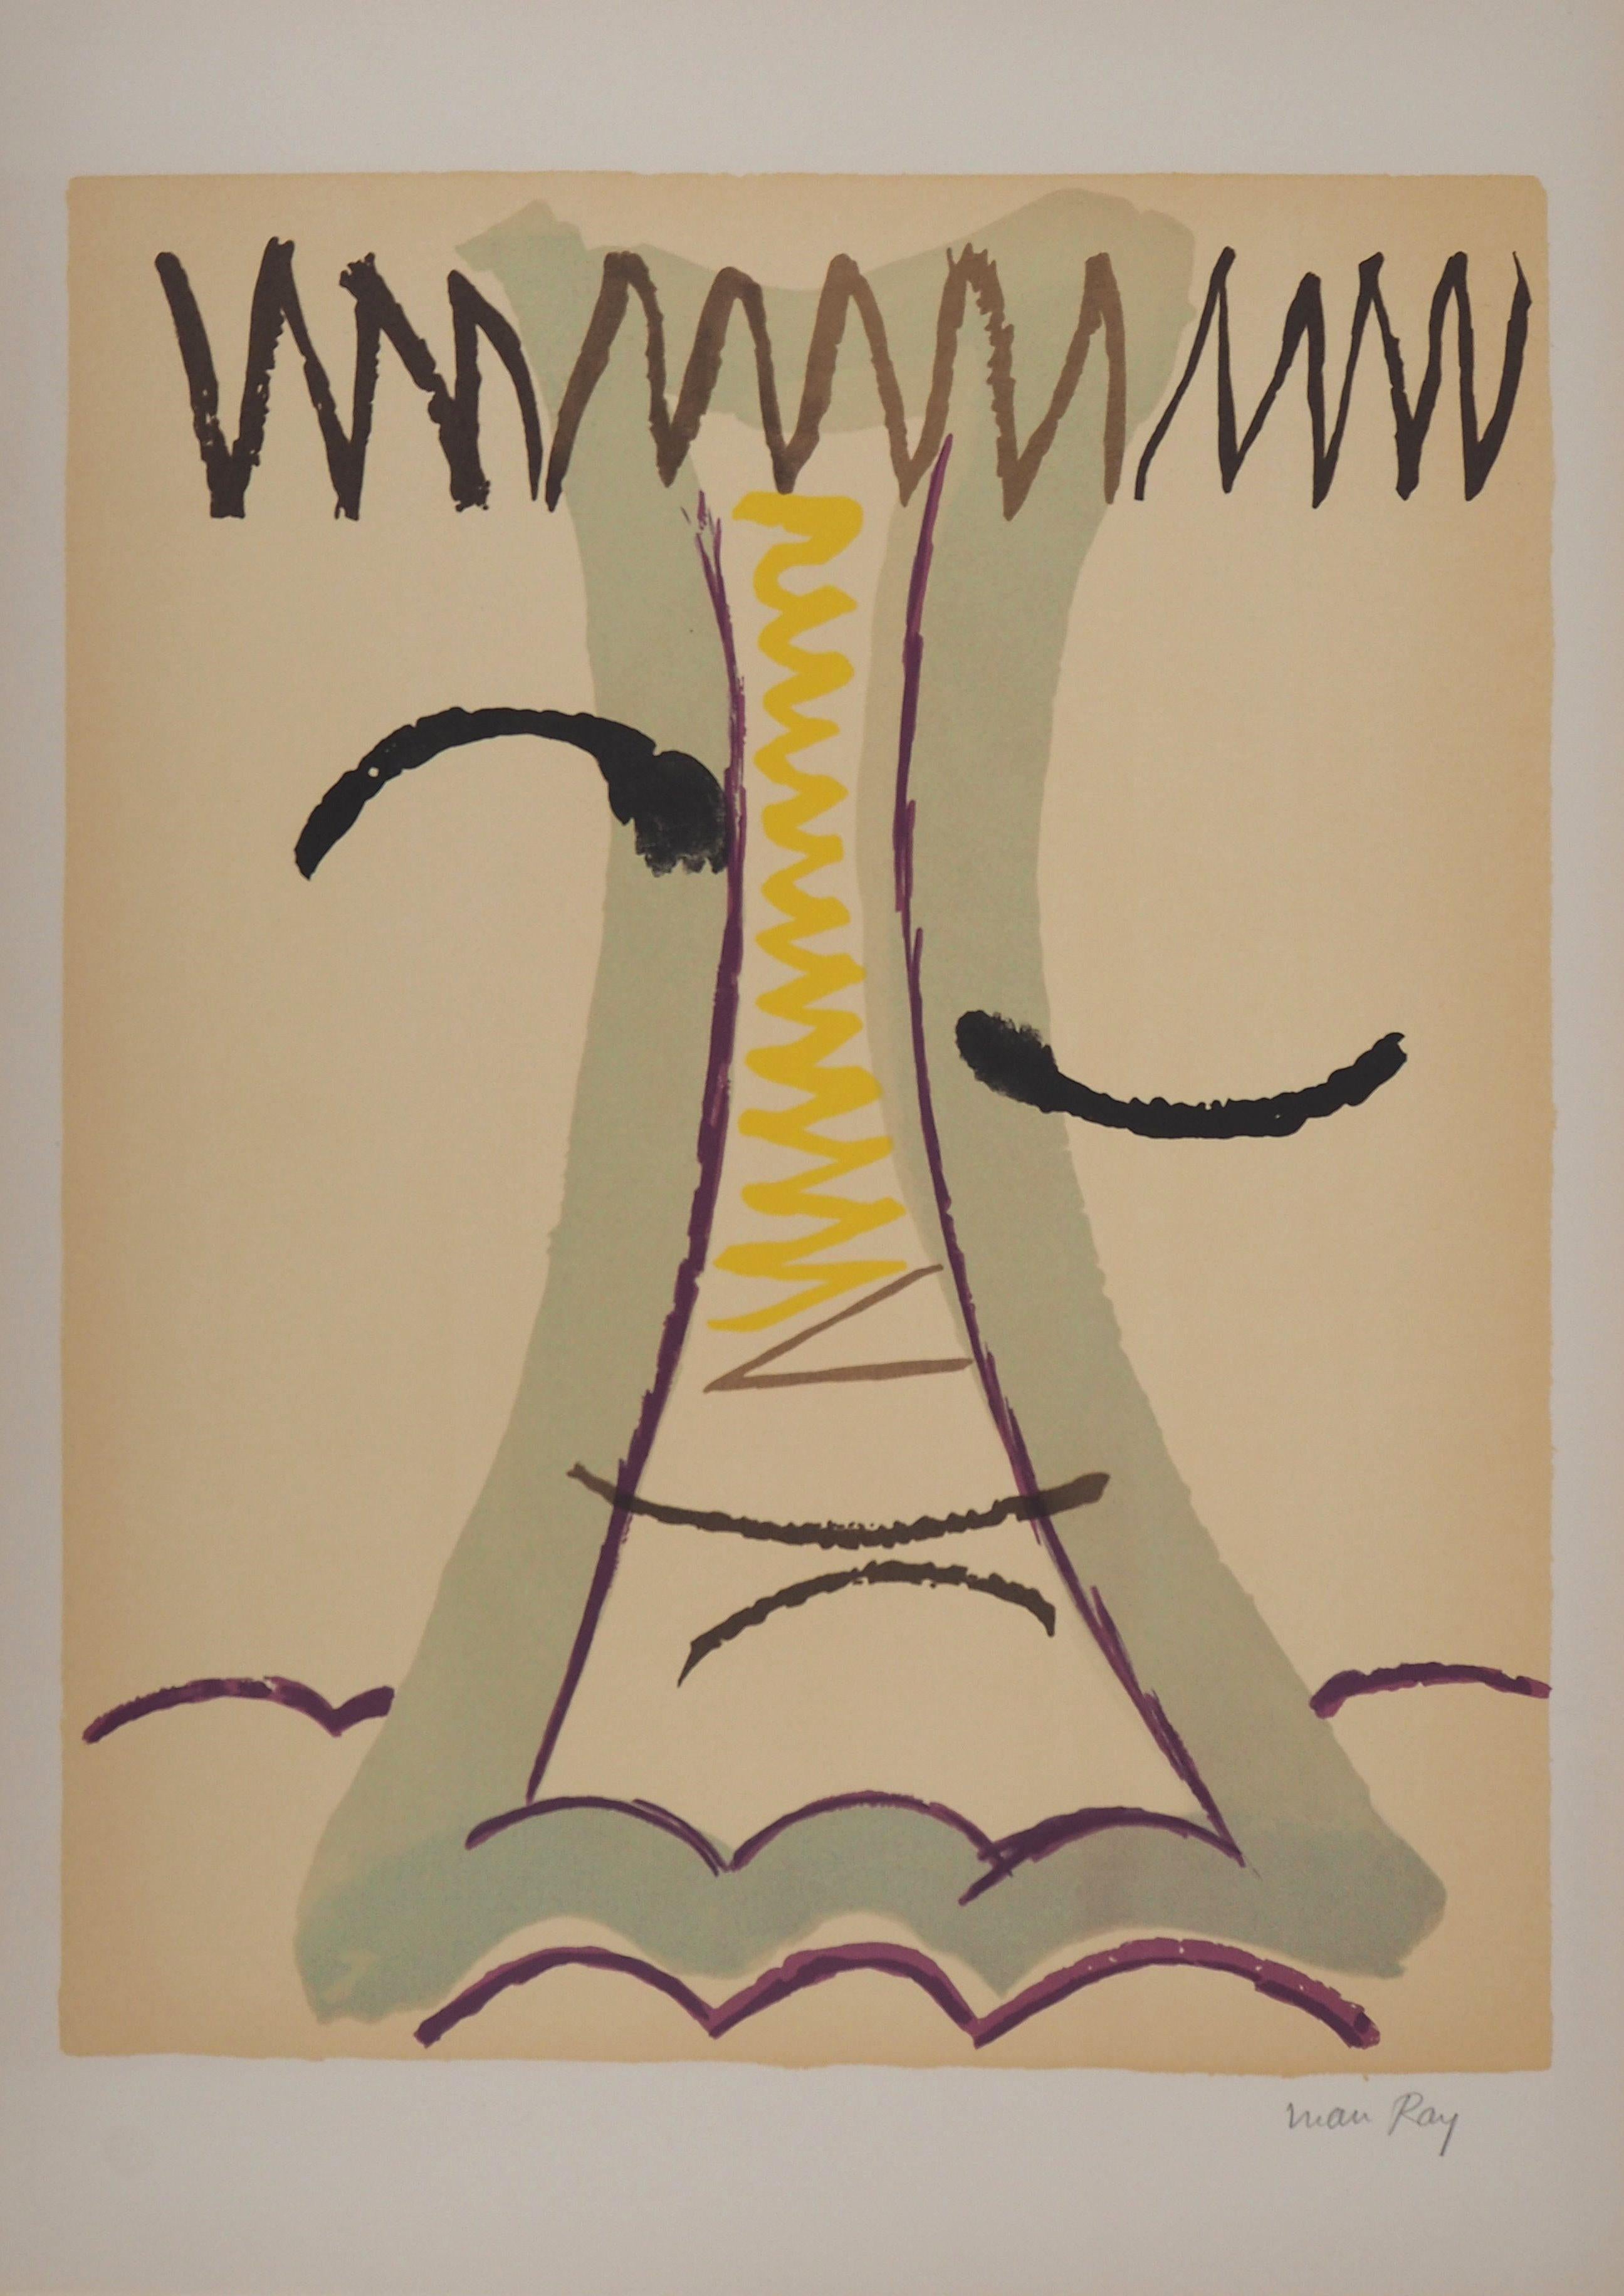 Oneiric Portait - Handsigned Original Lithograph (Mourlot) - Surrealist Print by Man Ray